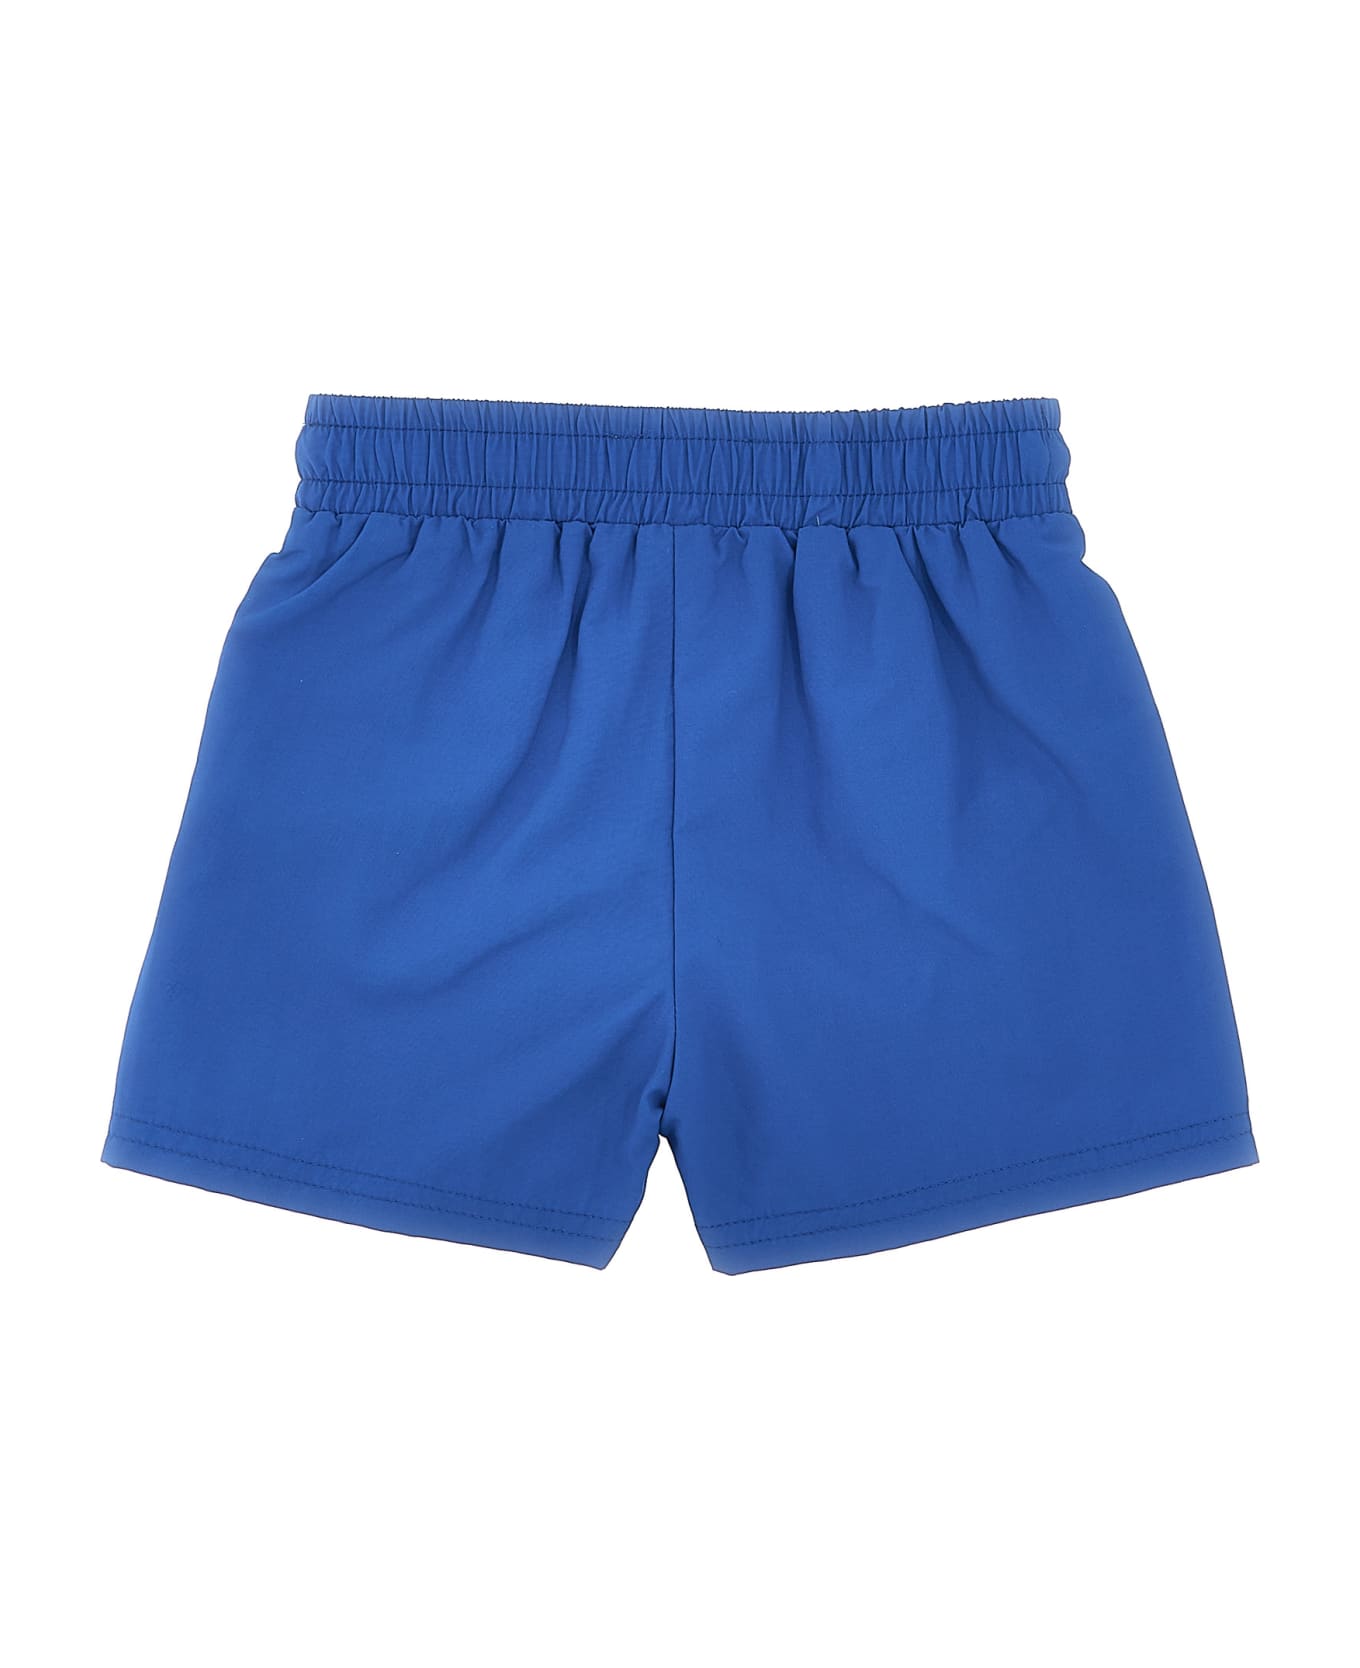 Kenzo Kids Logo Print Swim Shorts - Blue